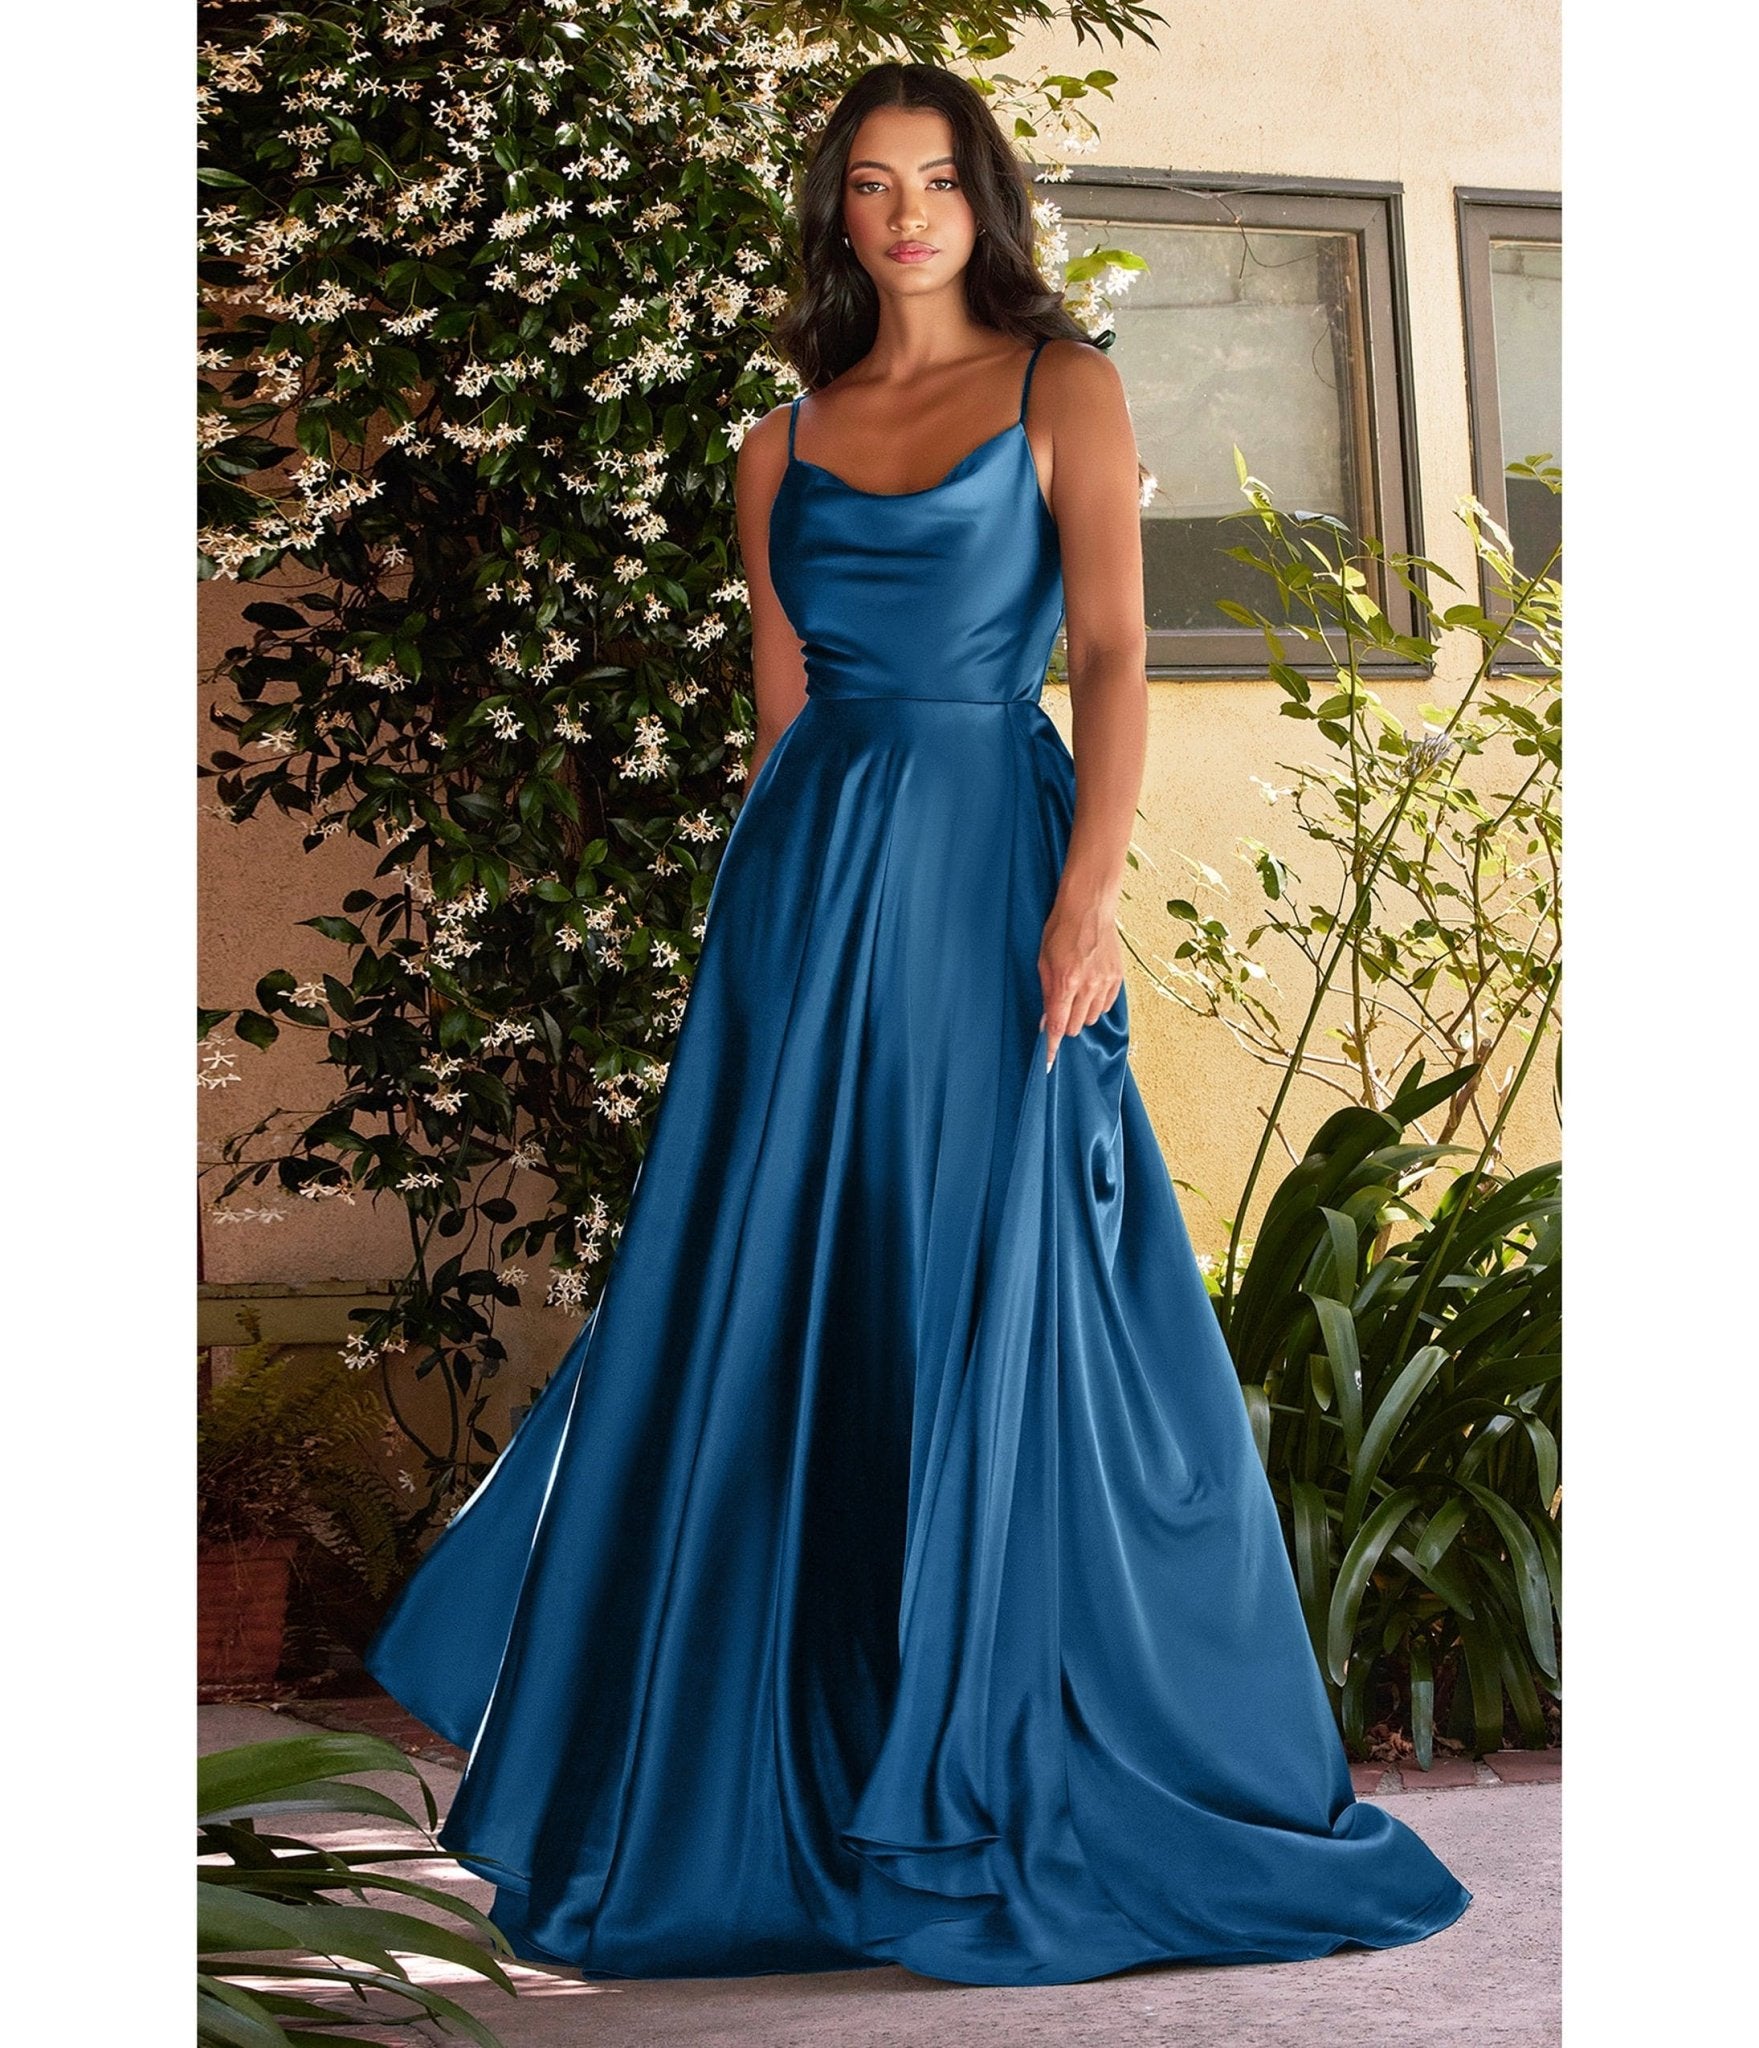 CAICJ98 Formal Dress Women's Off The Shoulder A-line Beaded Satin Prom  Dress Long Evening Ball Gown with Pockets Light Blue,XL - Walmart.com